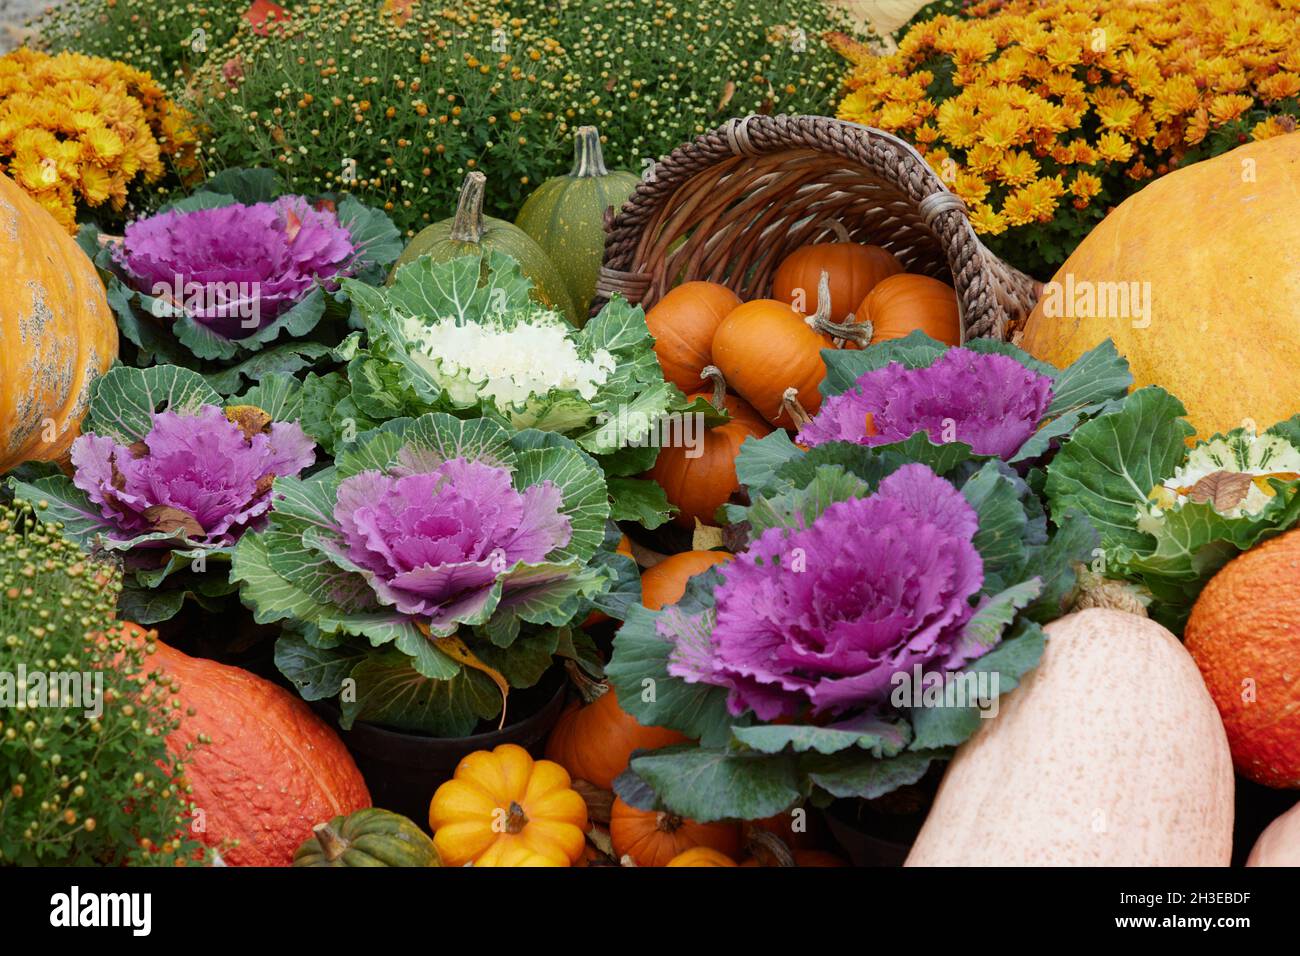 A display of ornamental cabbage plants, pot mums chrysanthemum  and cucurbita in autumn. Stock Photo